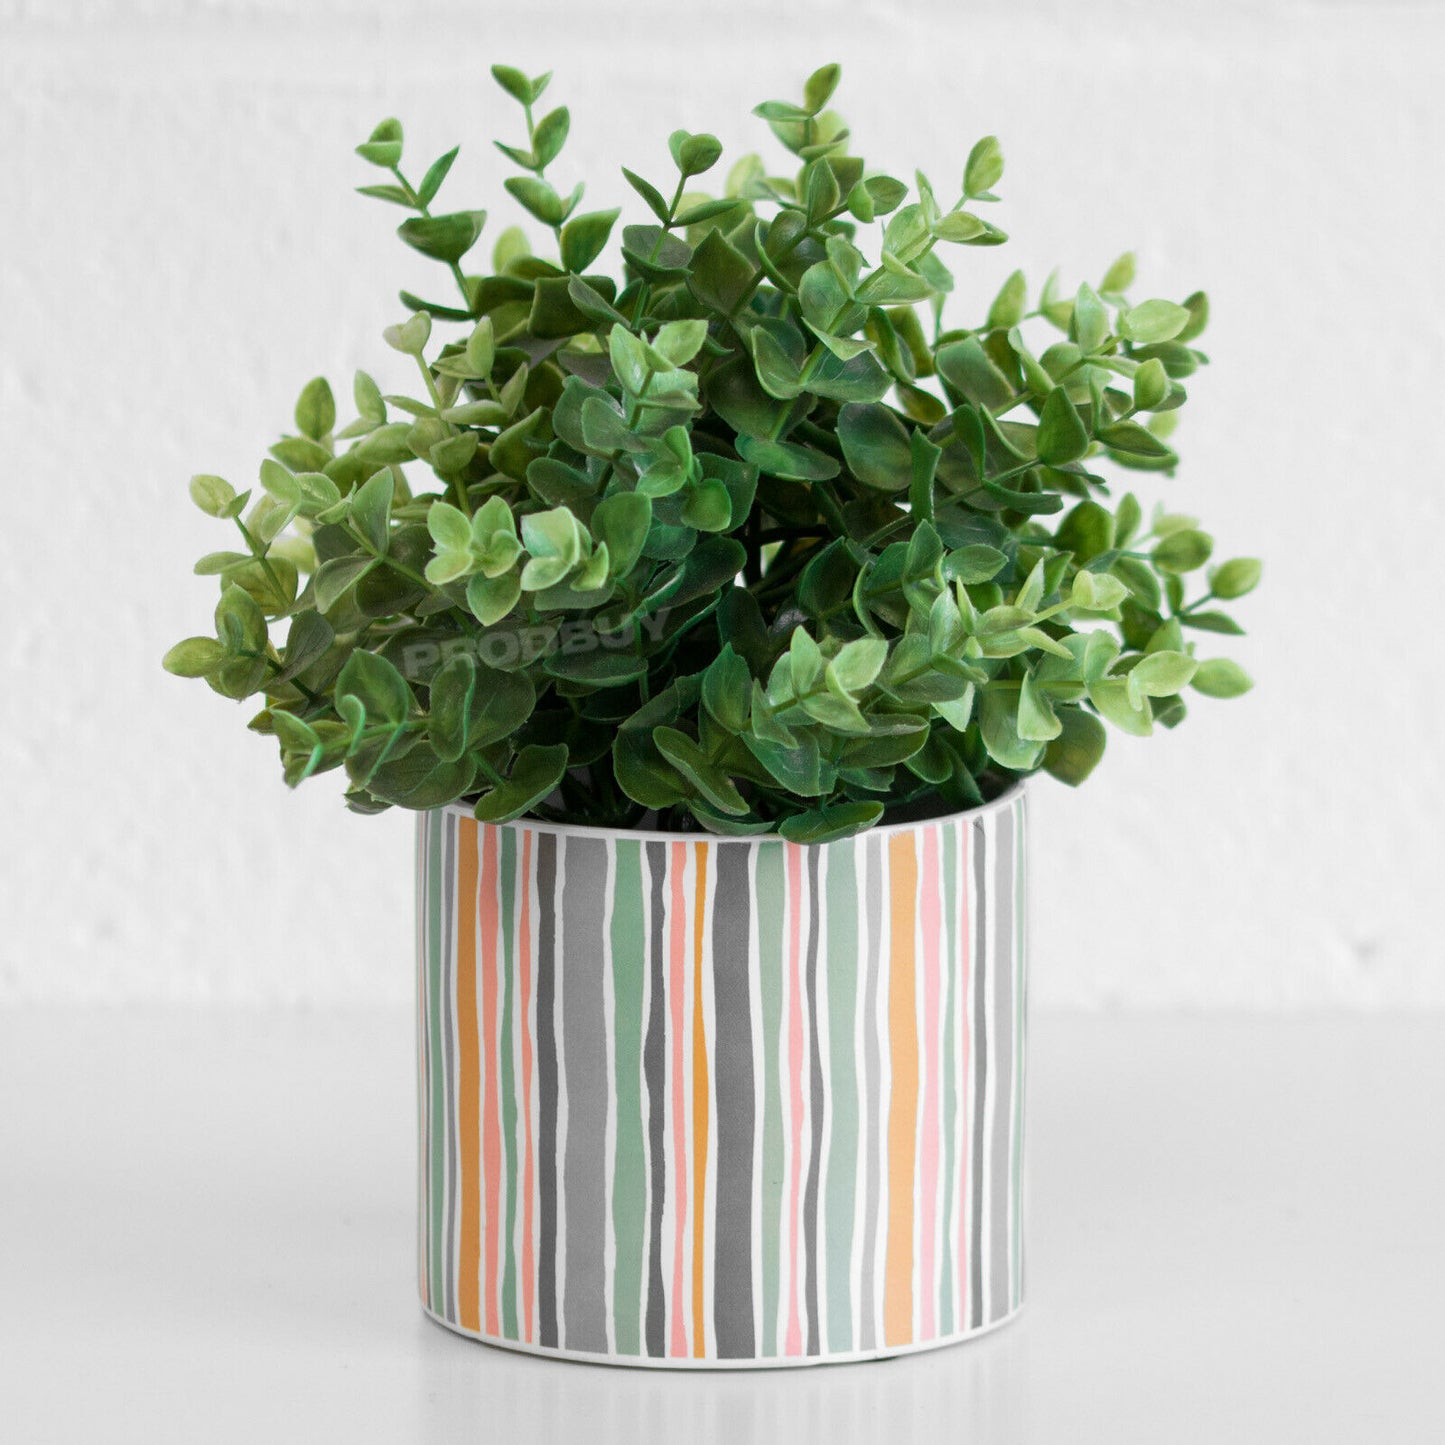 Colour Stripes Small 12cm Ceramic Plant Pot